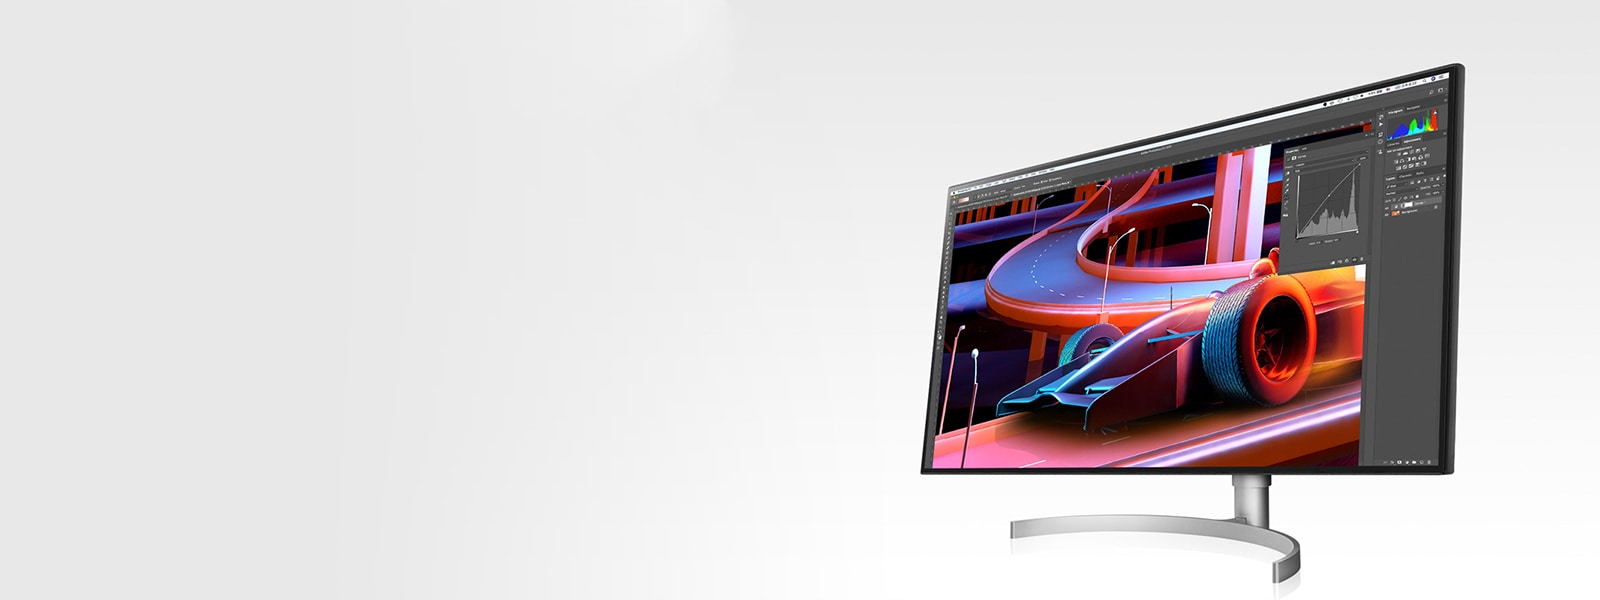 LG-ultrafine-desktop